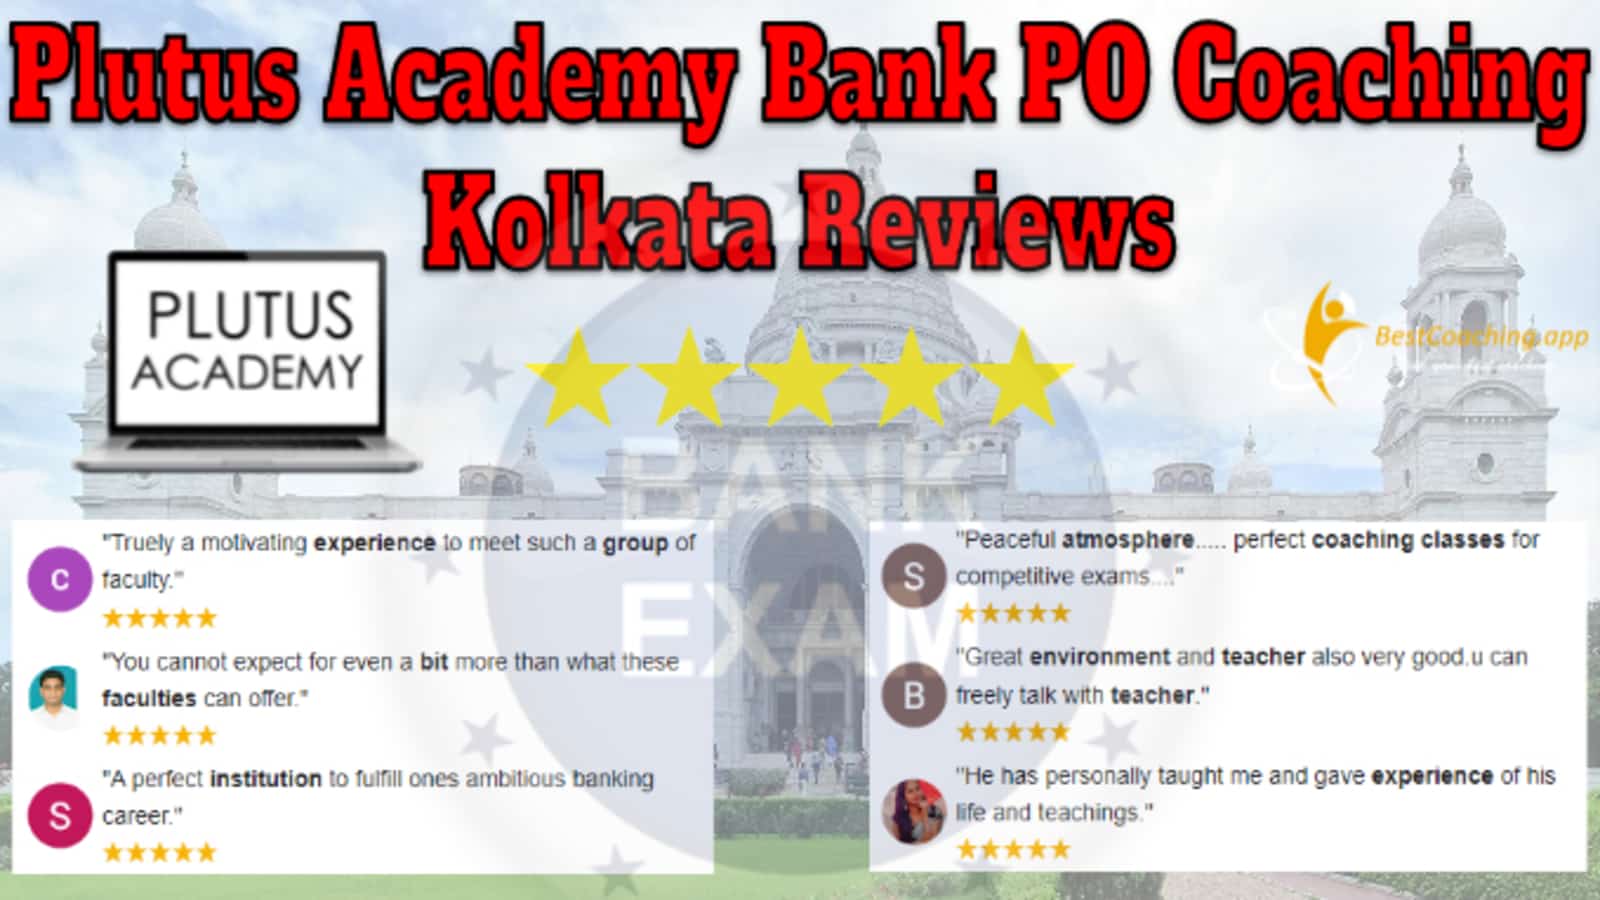 Plutus Academy Bank PO Coaching Kolkata Reviews